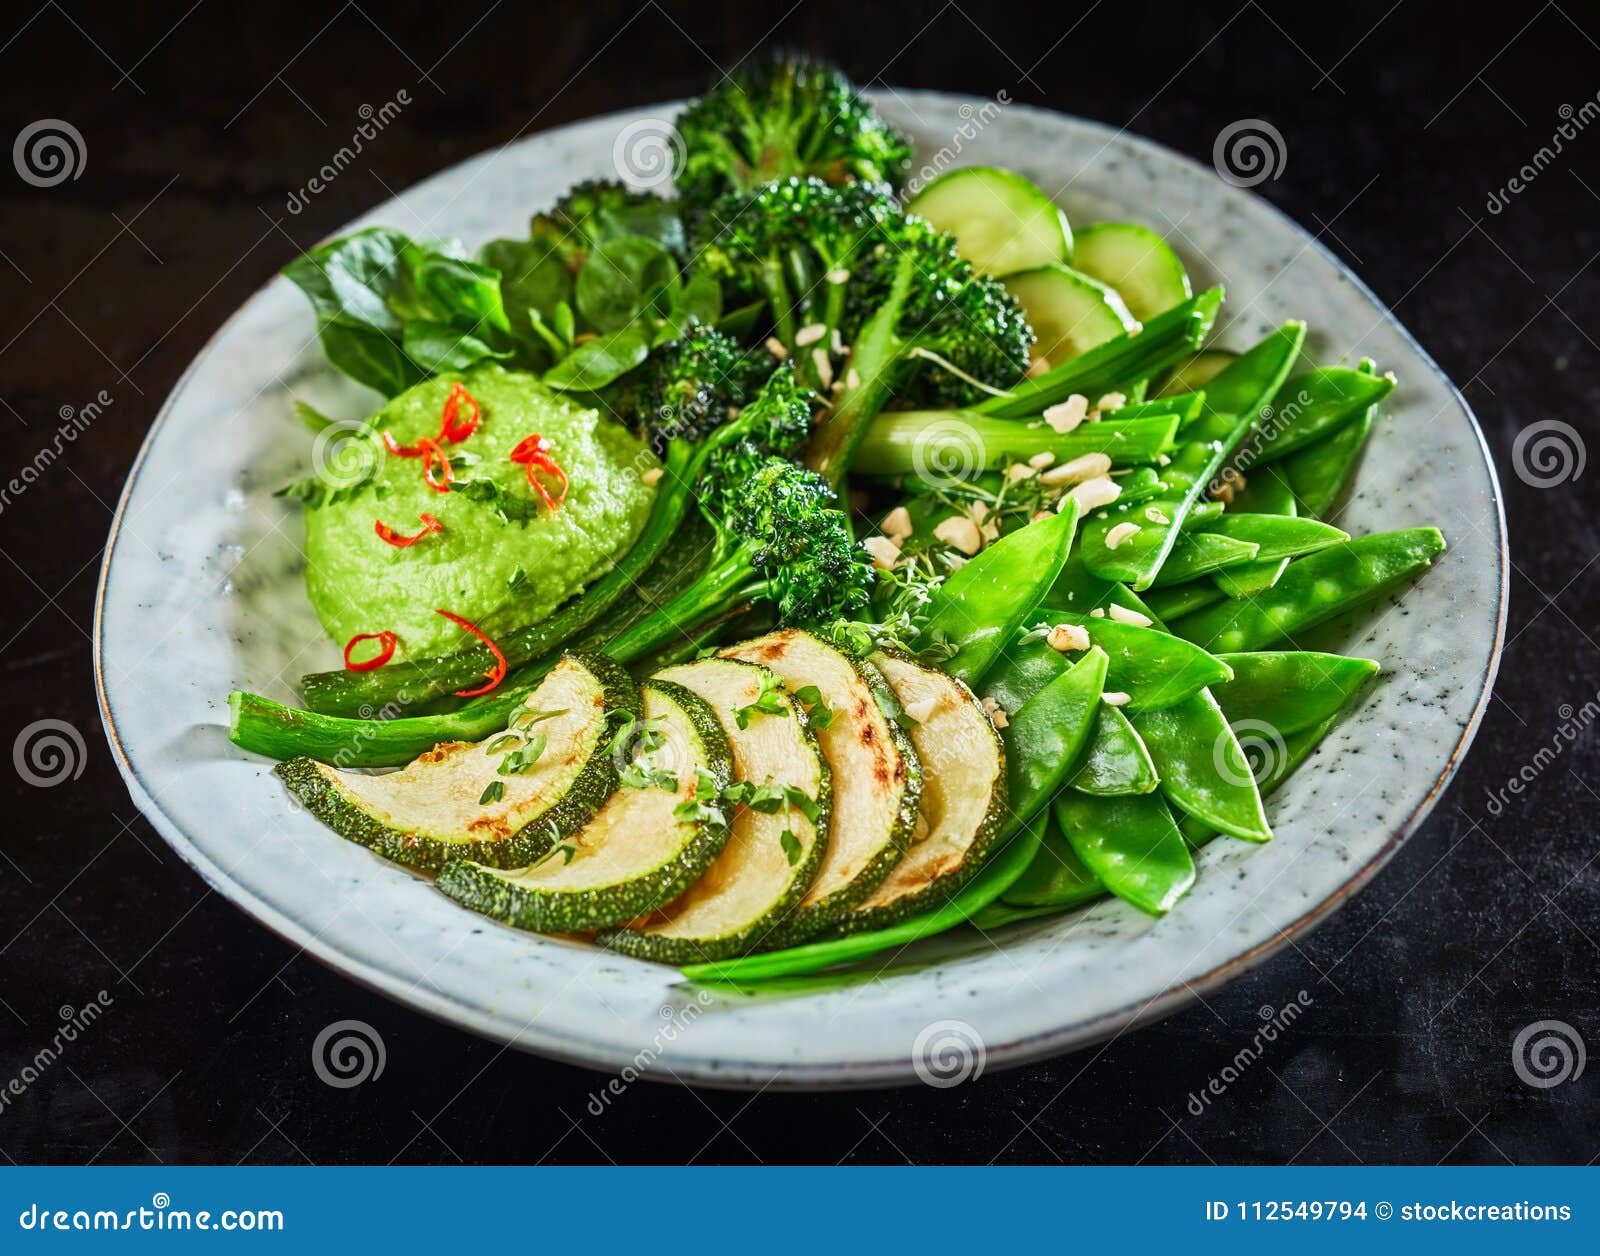 tasty green vegetable buddha bowl with avocado dip